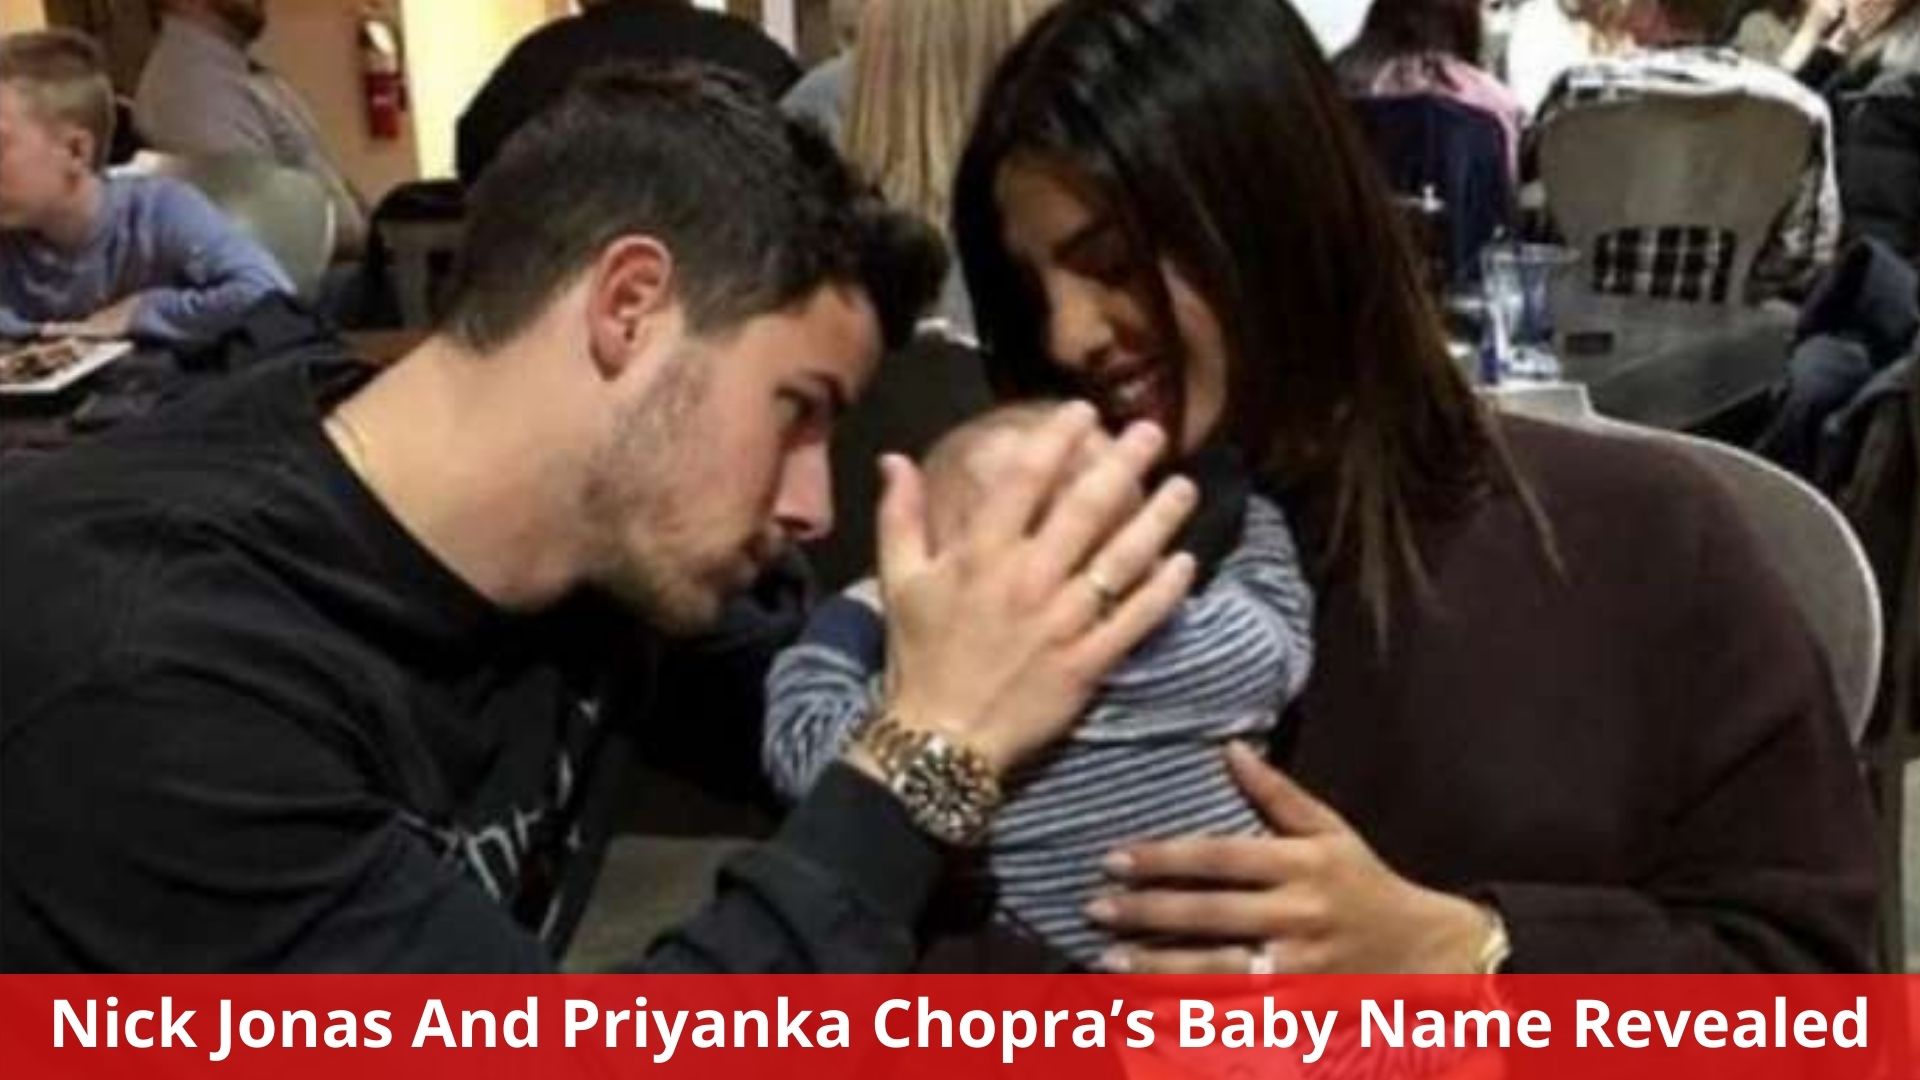 Nick Jonas And Priyanka Chopra’s Baby Name Revealed After 3 Months